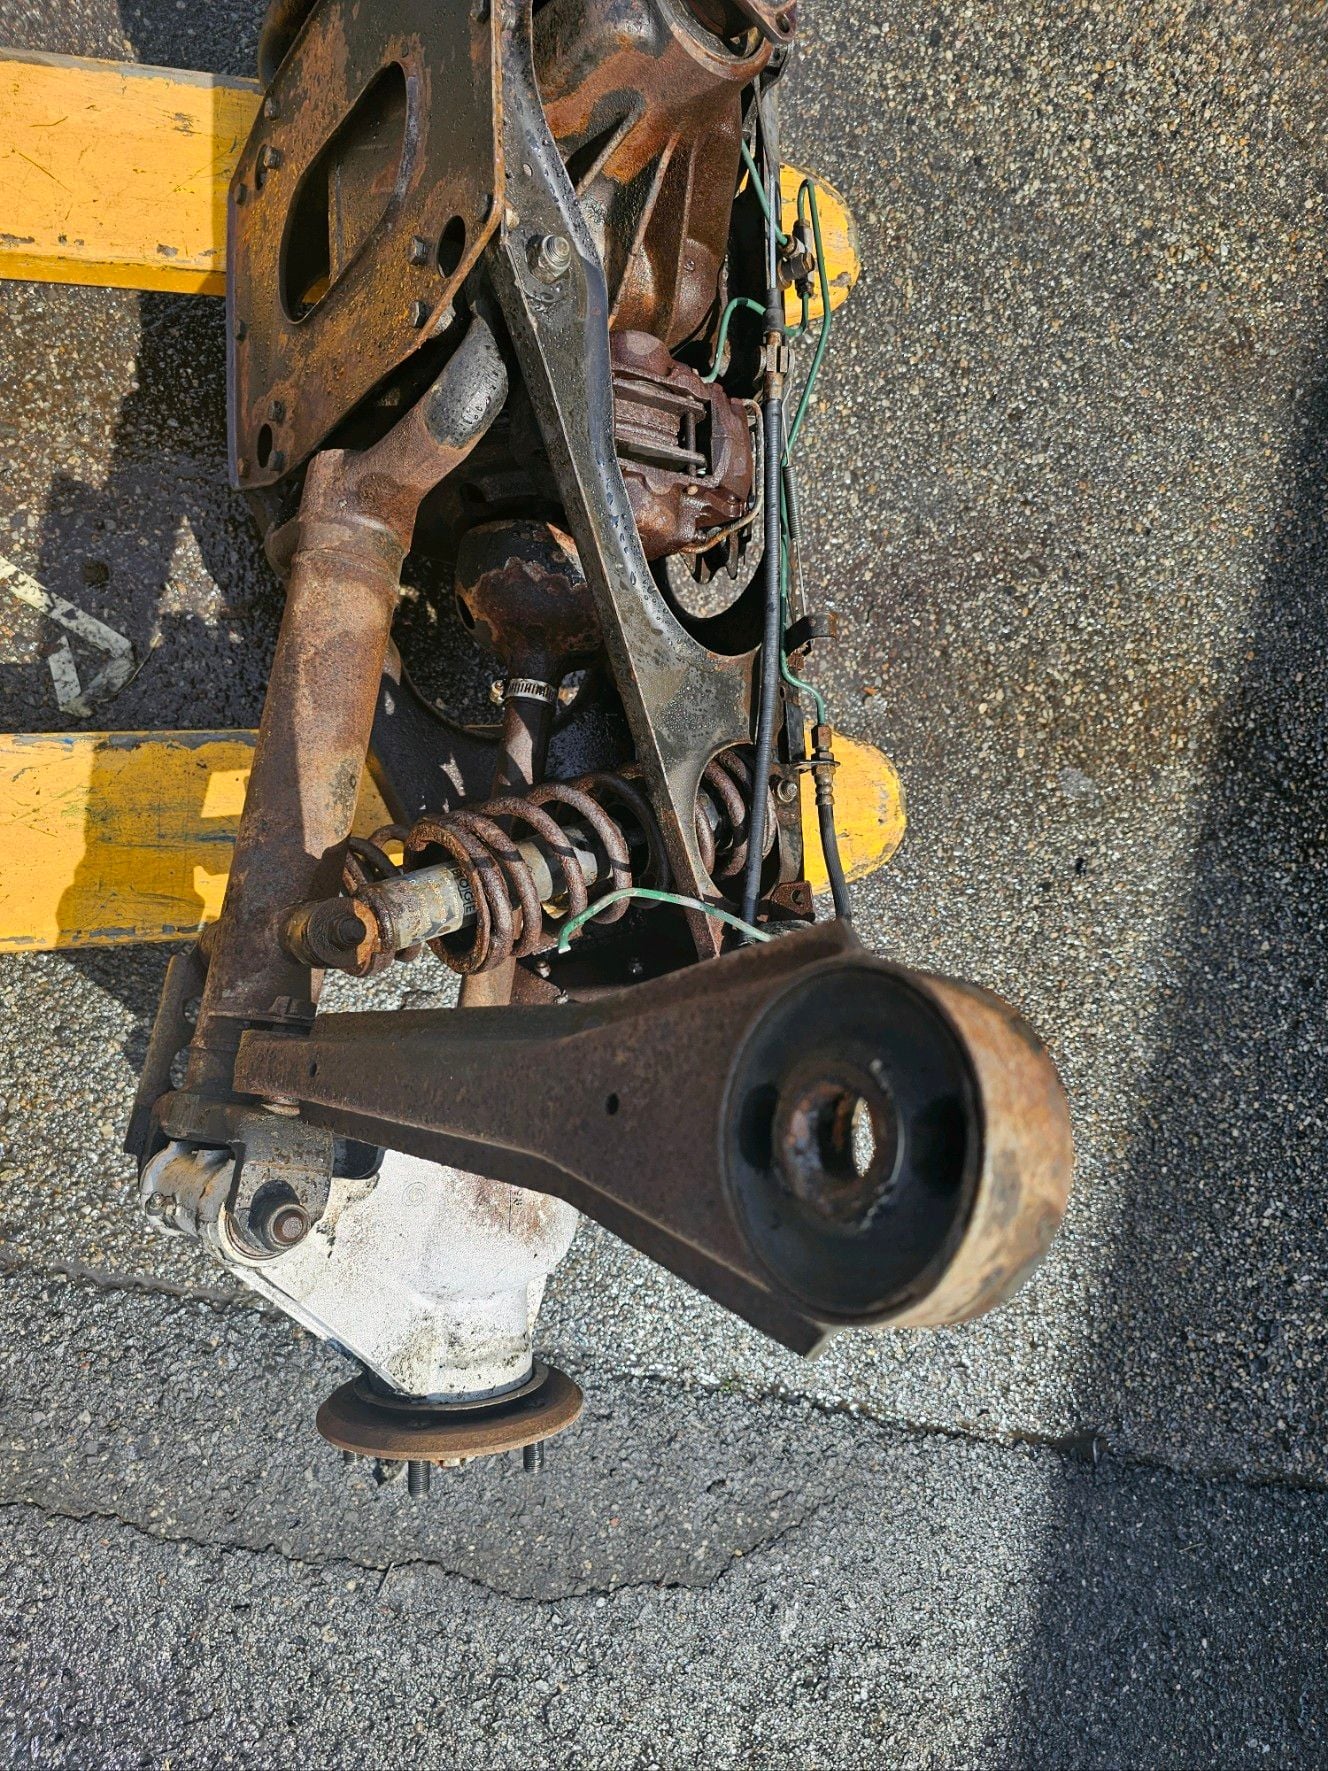 Drivetrain - Complete Rear Suspension Assembly - Used - 1986 Jaguar XJS - North Bergen, NJ 07047, United States